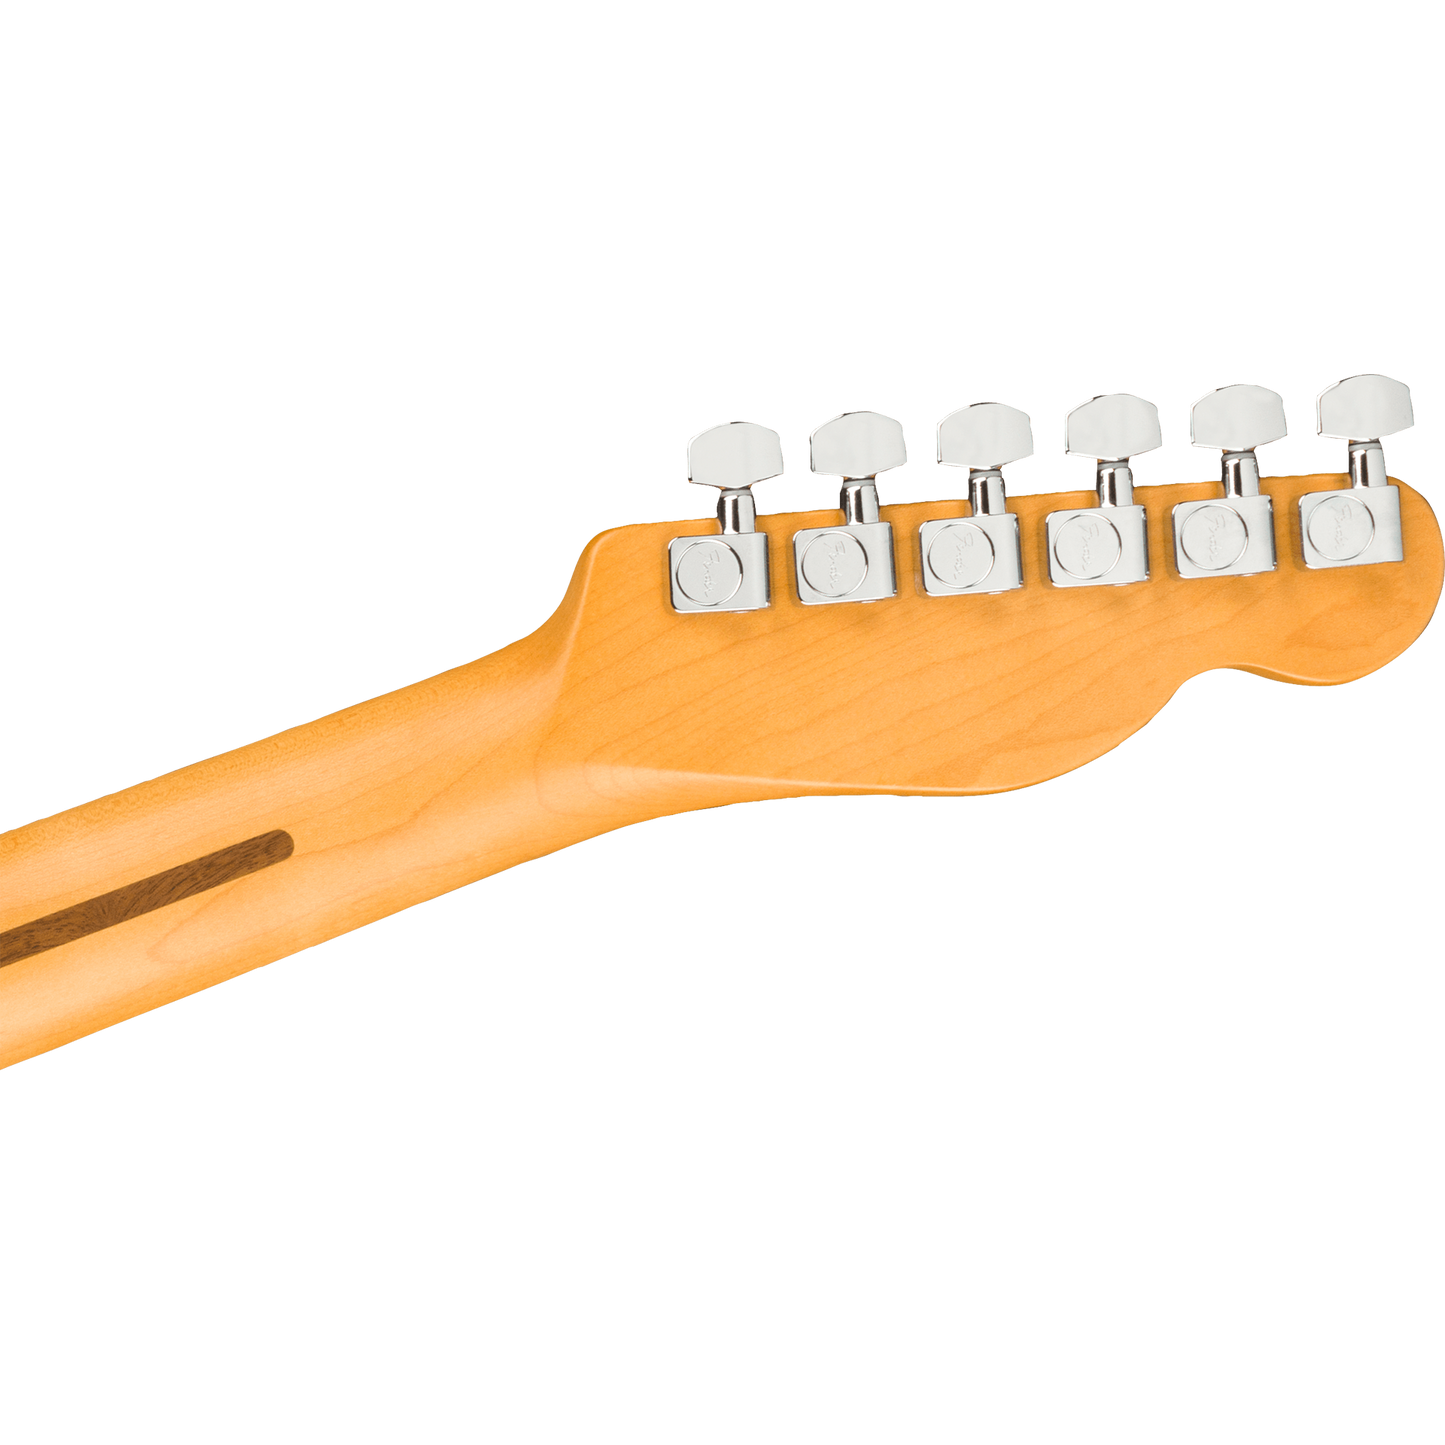 Fender American Professional II Telecaster® Left-Hand Electric Guitar, 3-Color Sunburst